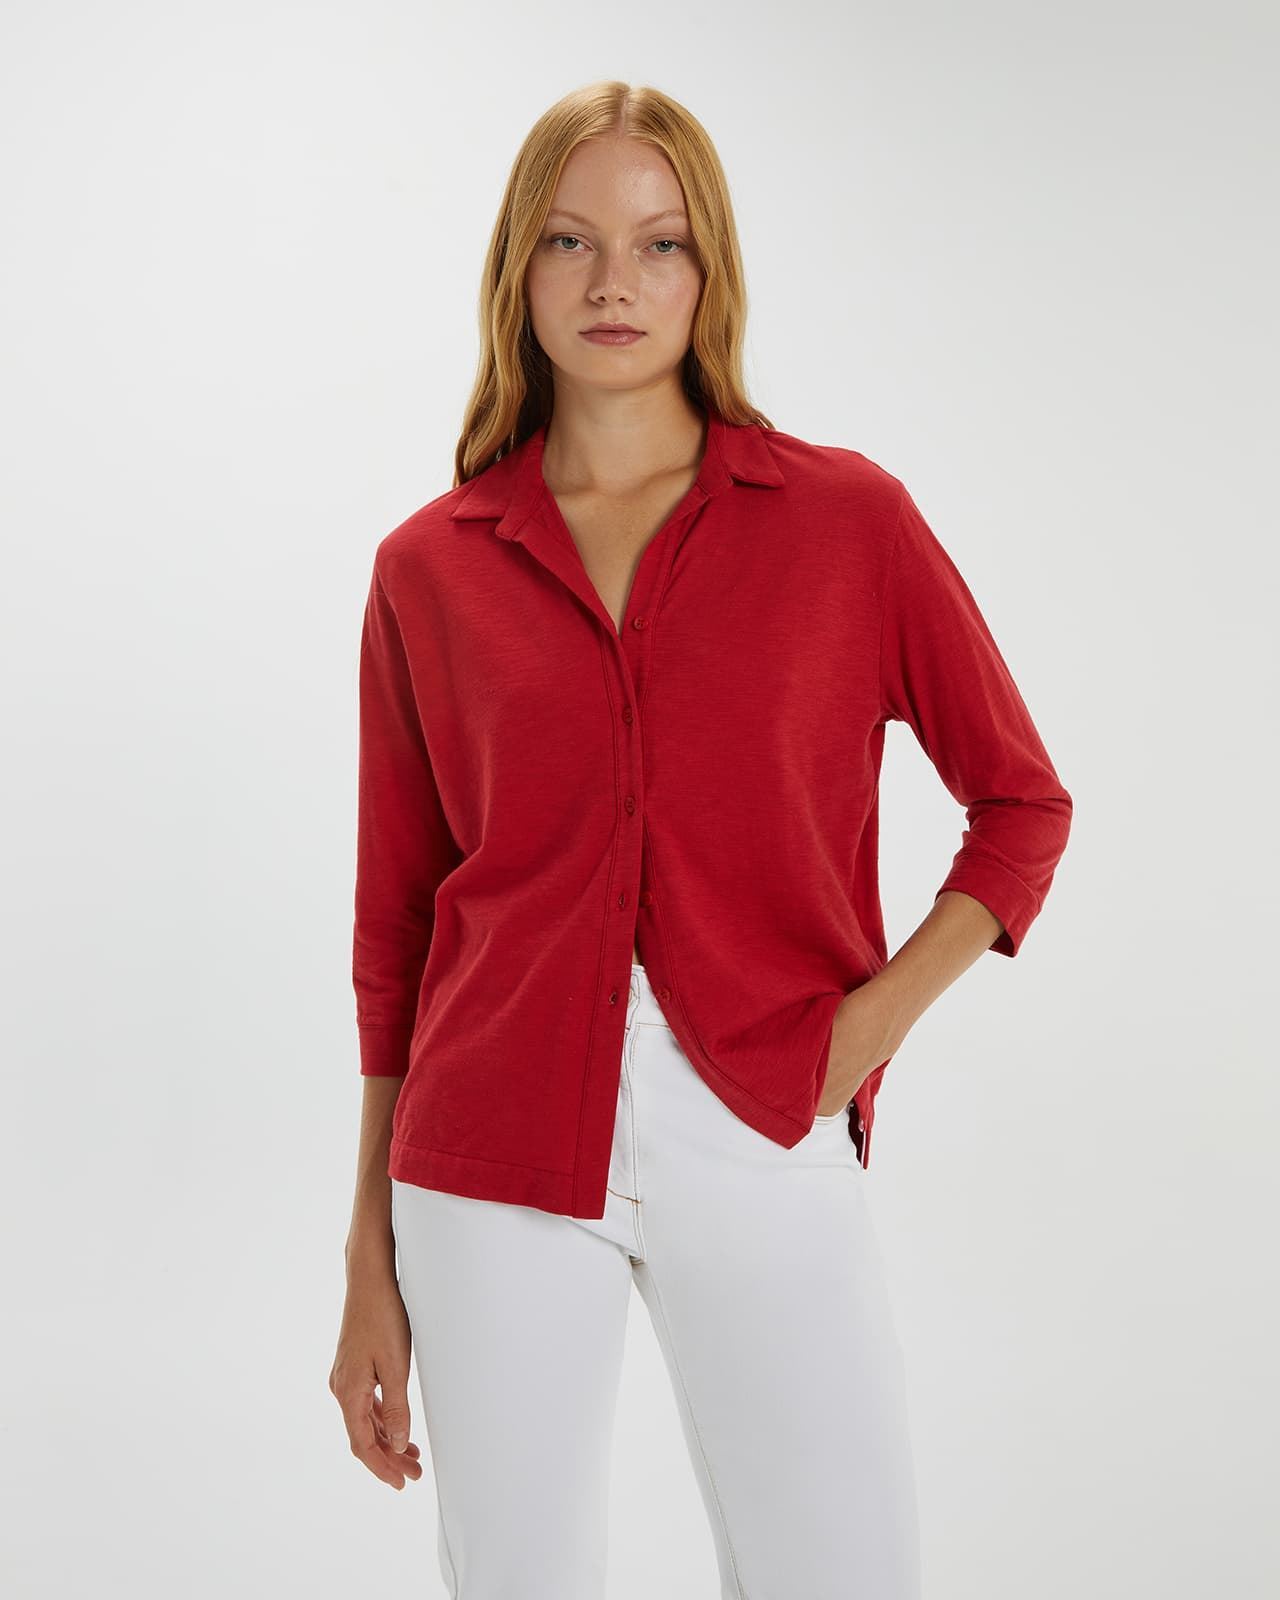 Blusa roja - Imagen 1